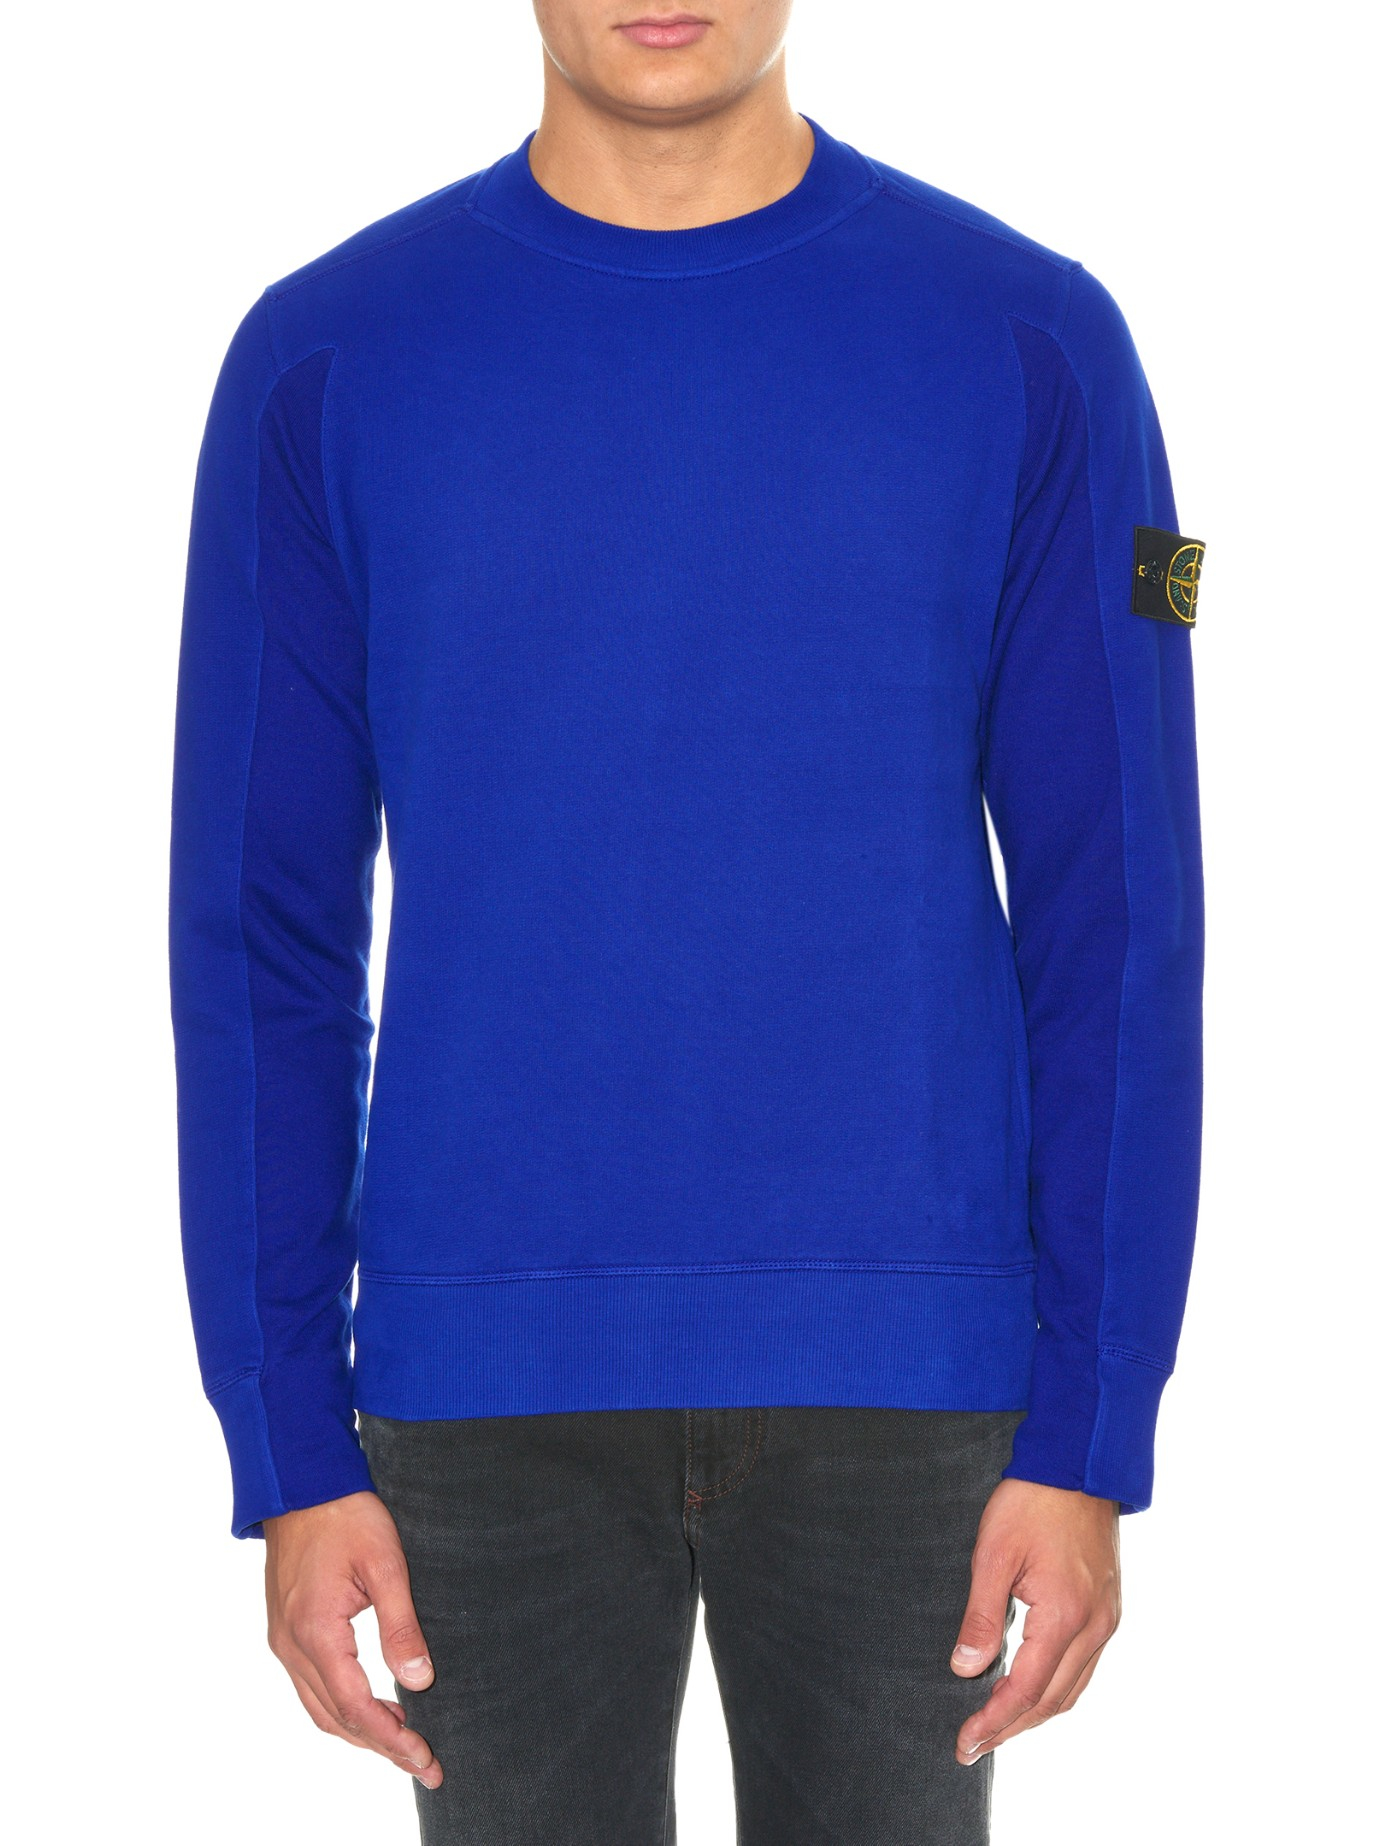 Stone Island Crew Neck Cotton-fleece Sweatshirt in Blue for Men - Lyst